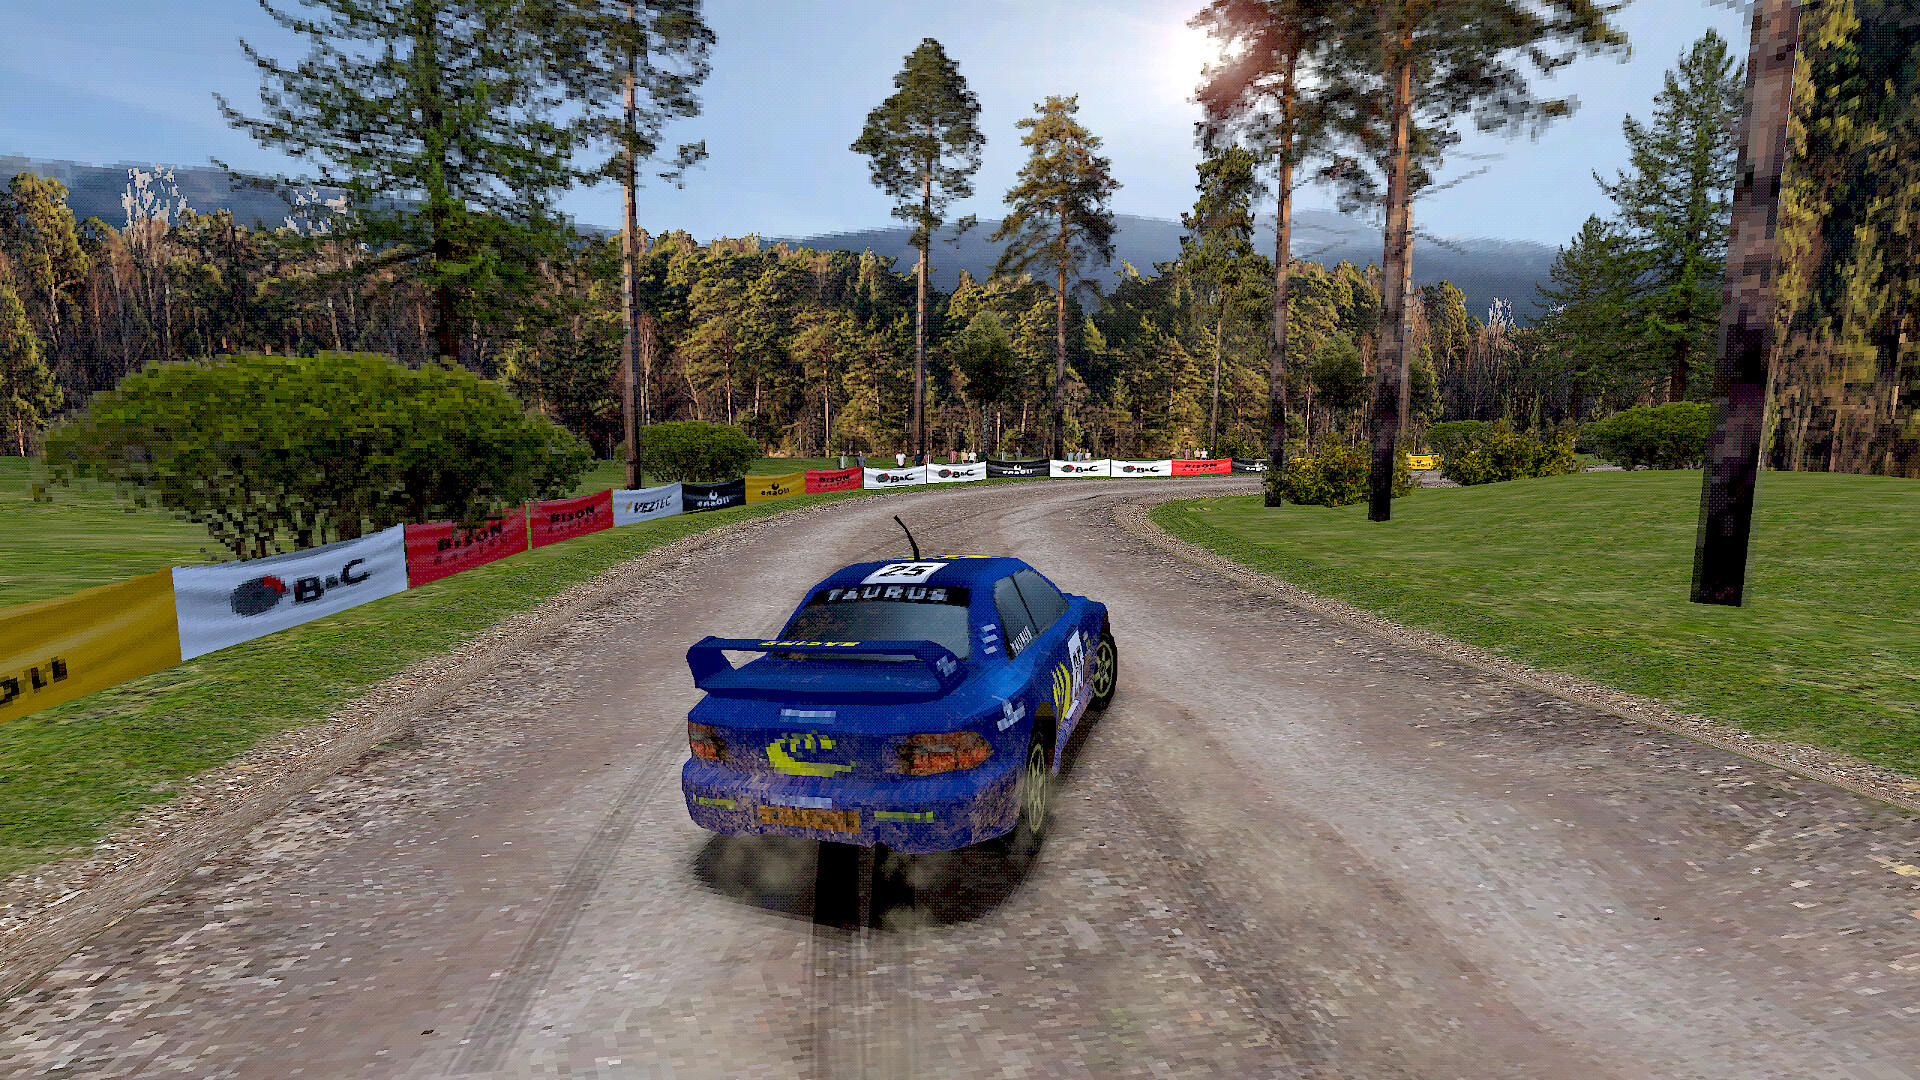 Screenshot 1 of Rallye de la vieille école 